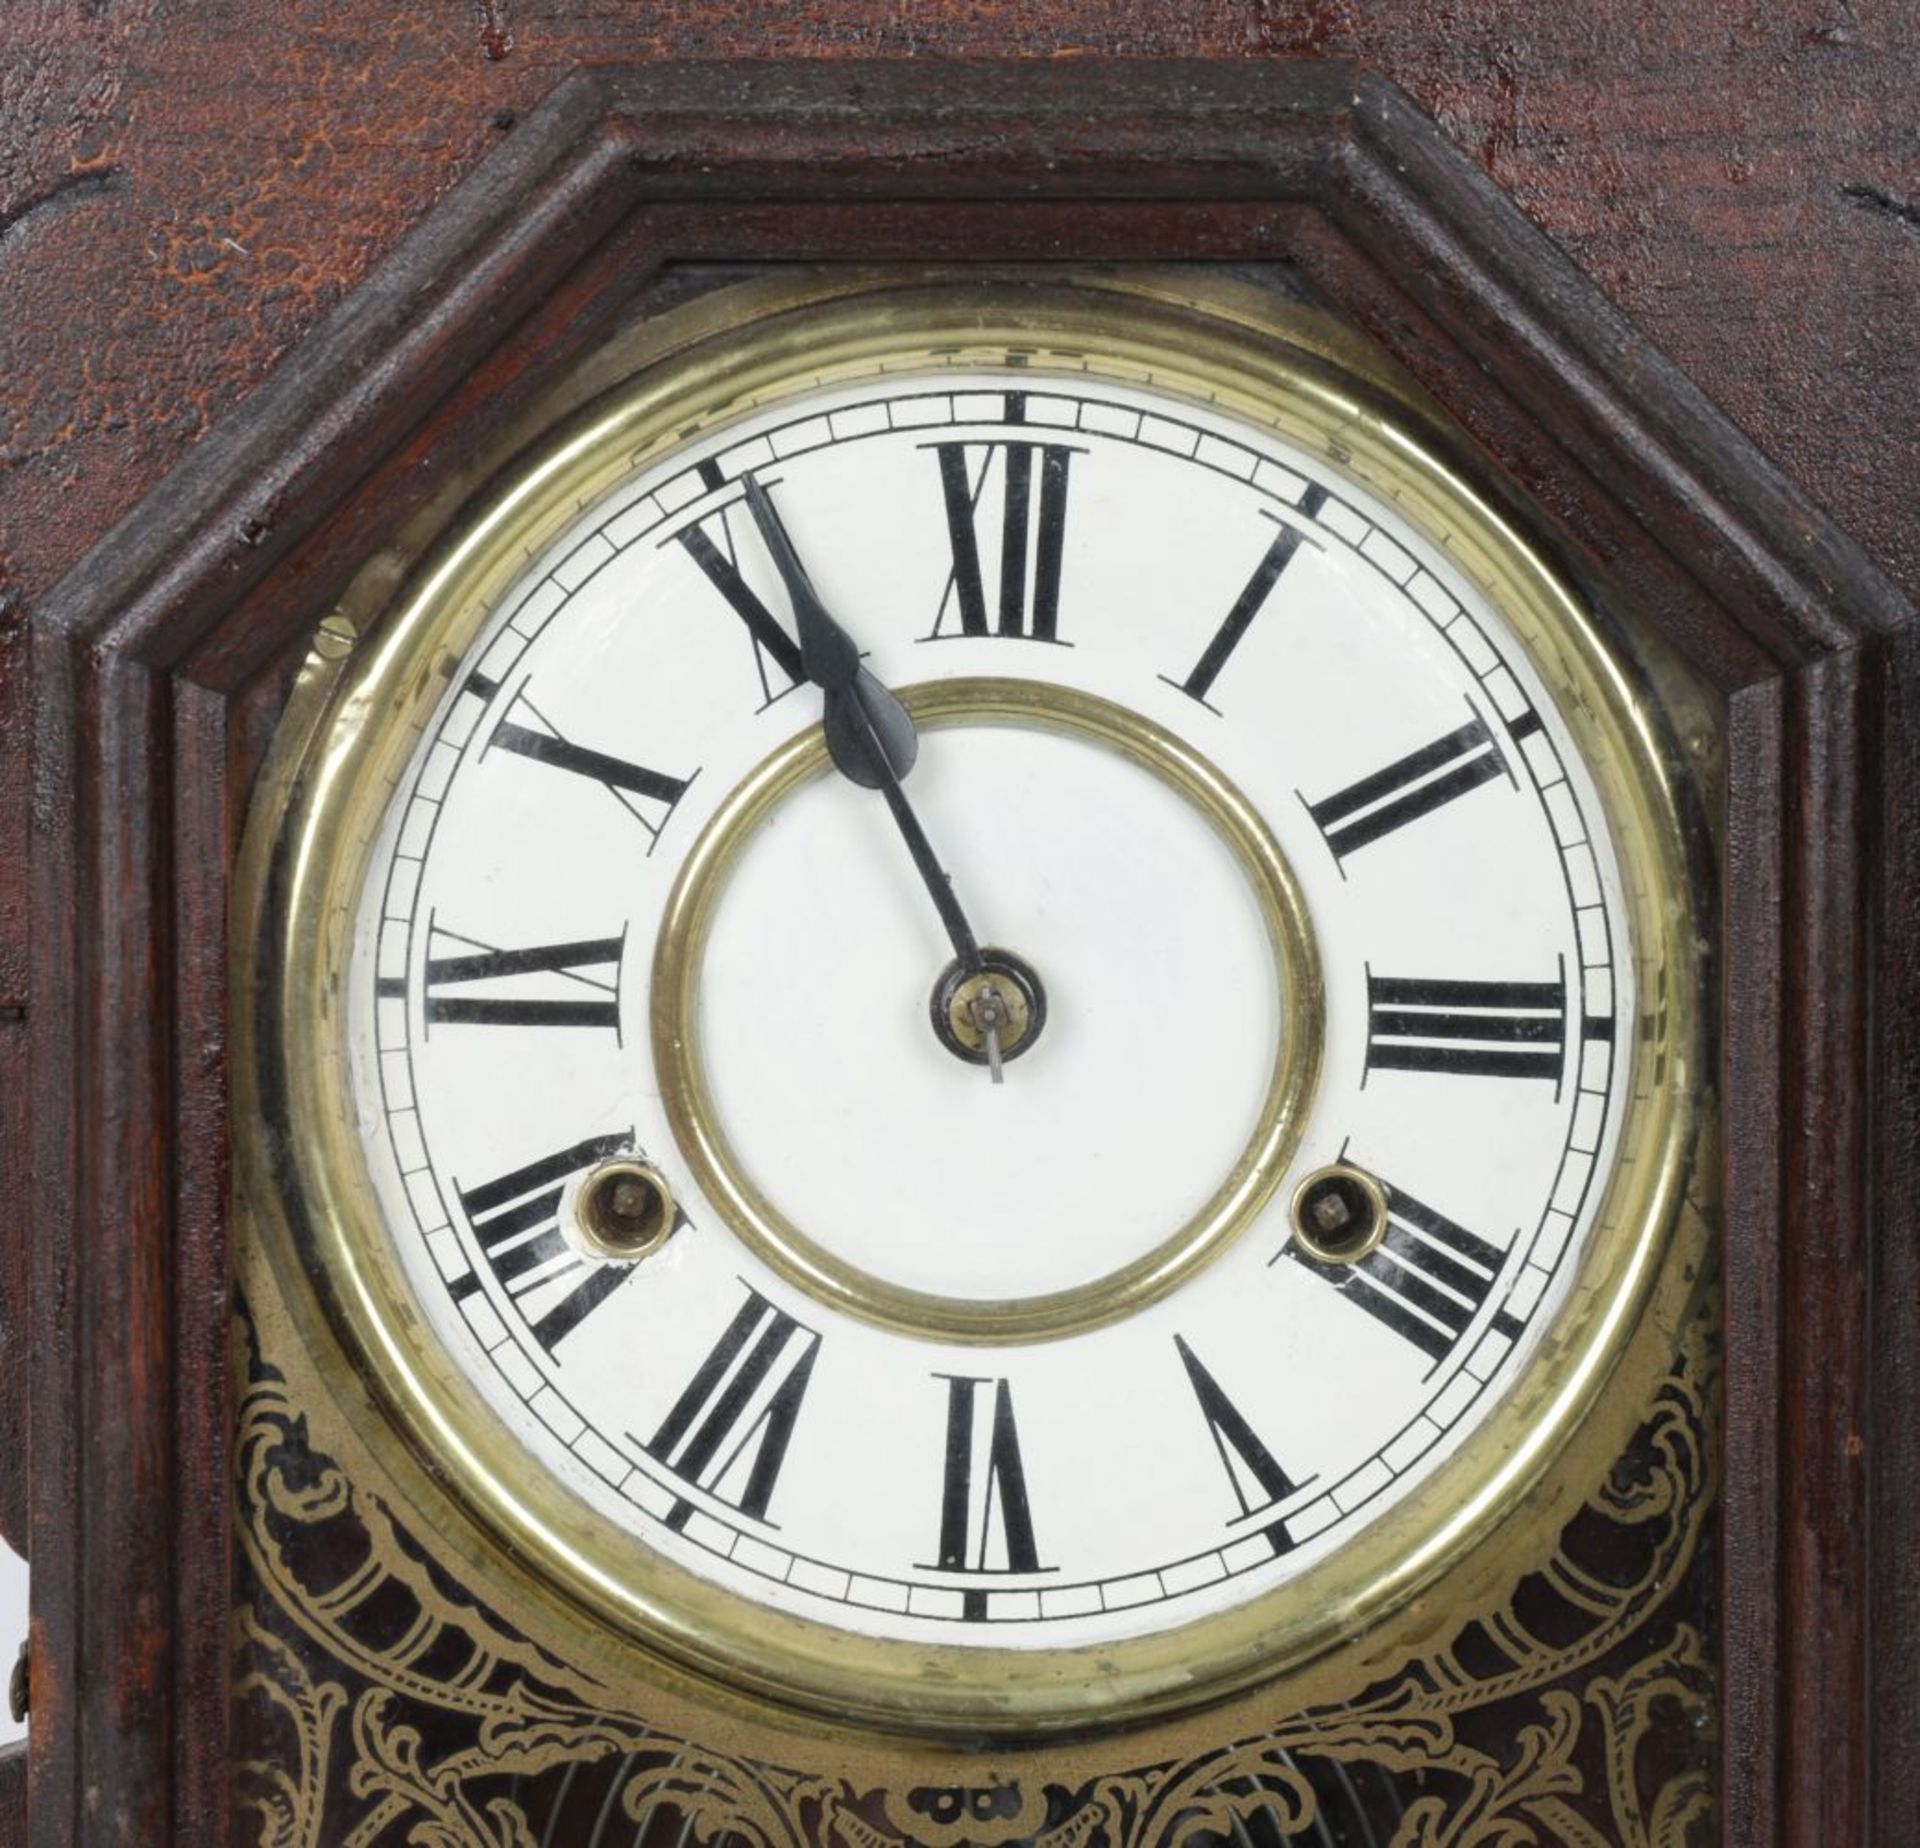 19TH-CENTURY AMERICAN MANTEL CLOCK - Image 2 of 2